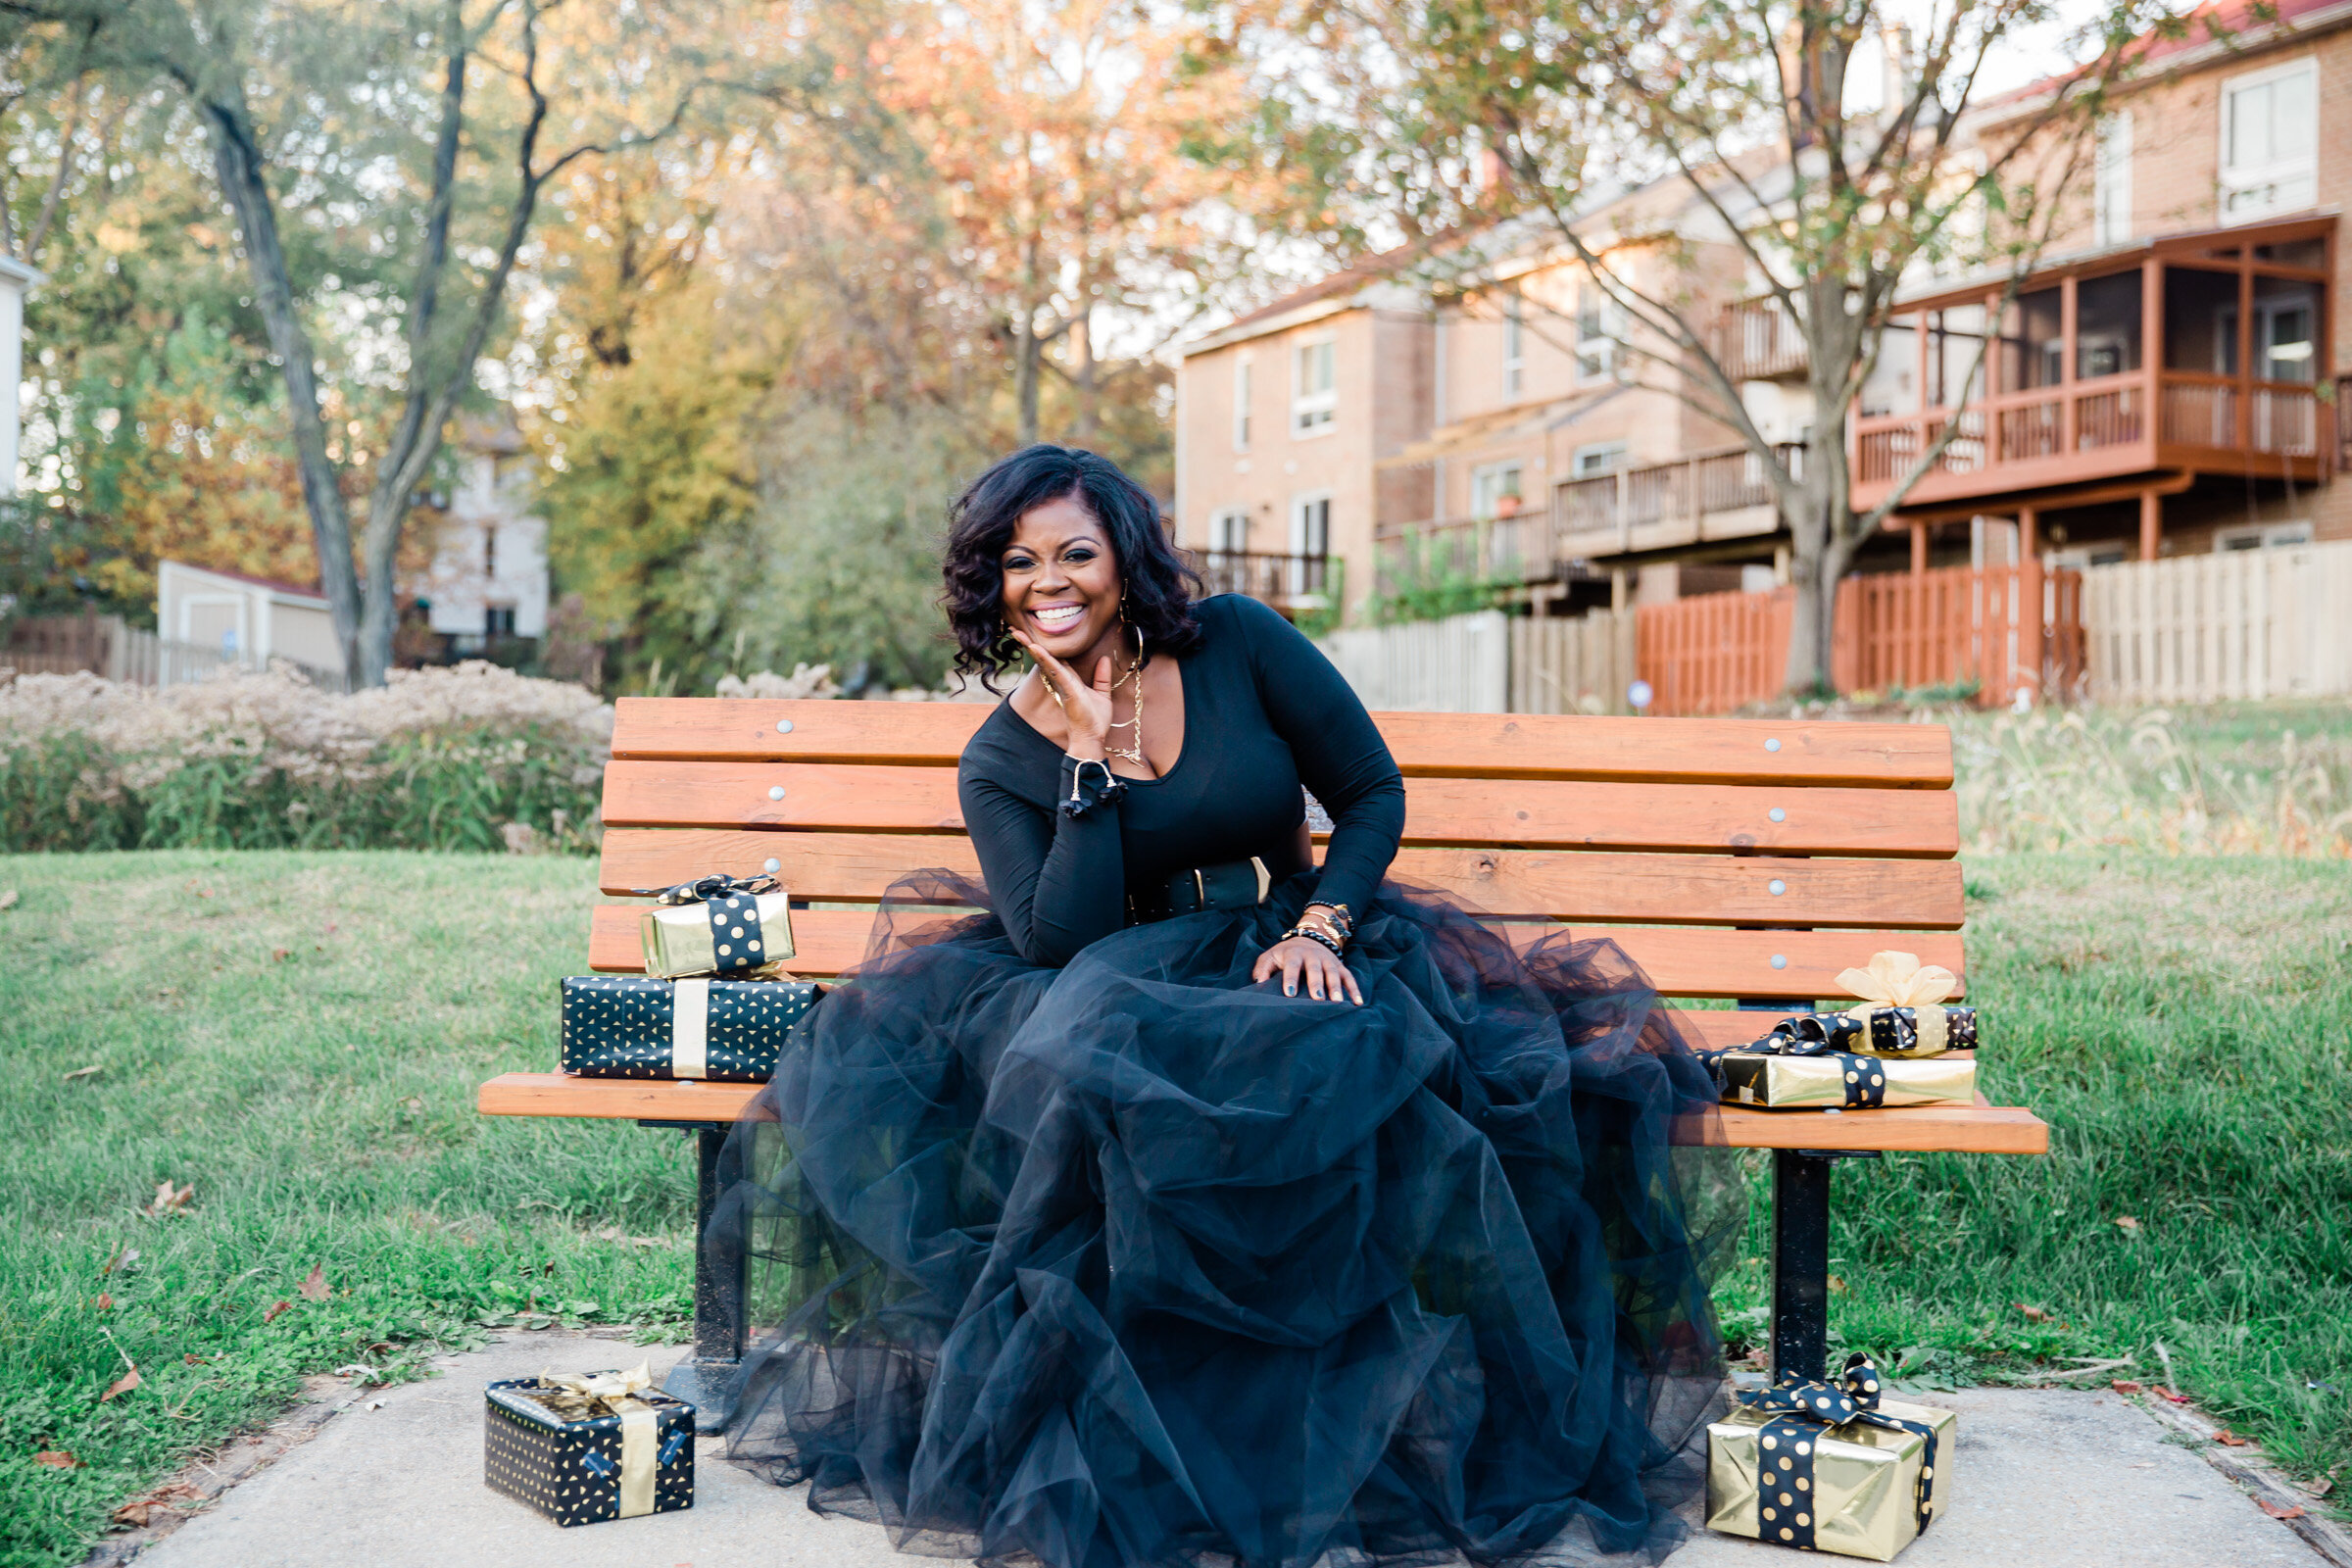 Black Female Portrait Photographer in Baltimore 40t Birthday Photoshoot by Megapixels Media Photography-48.jpg